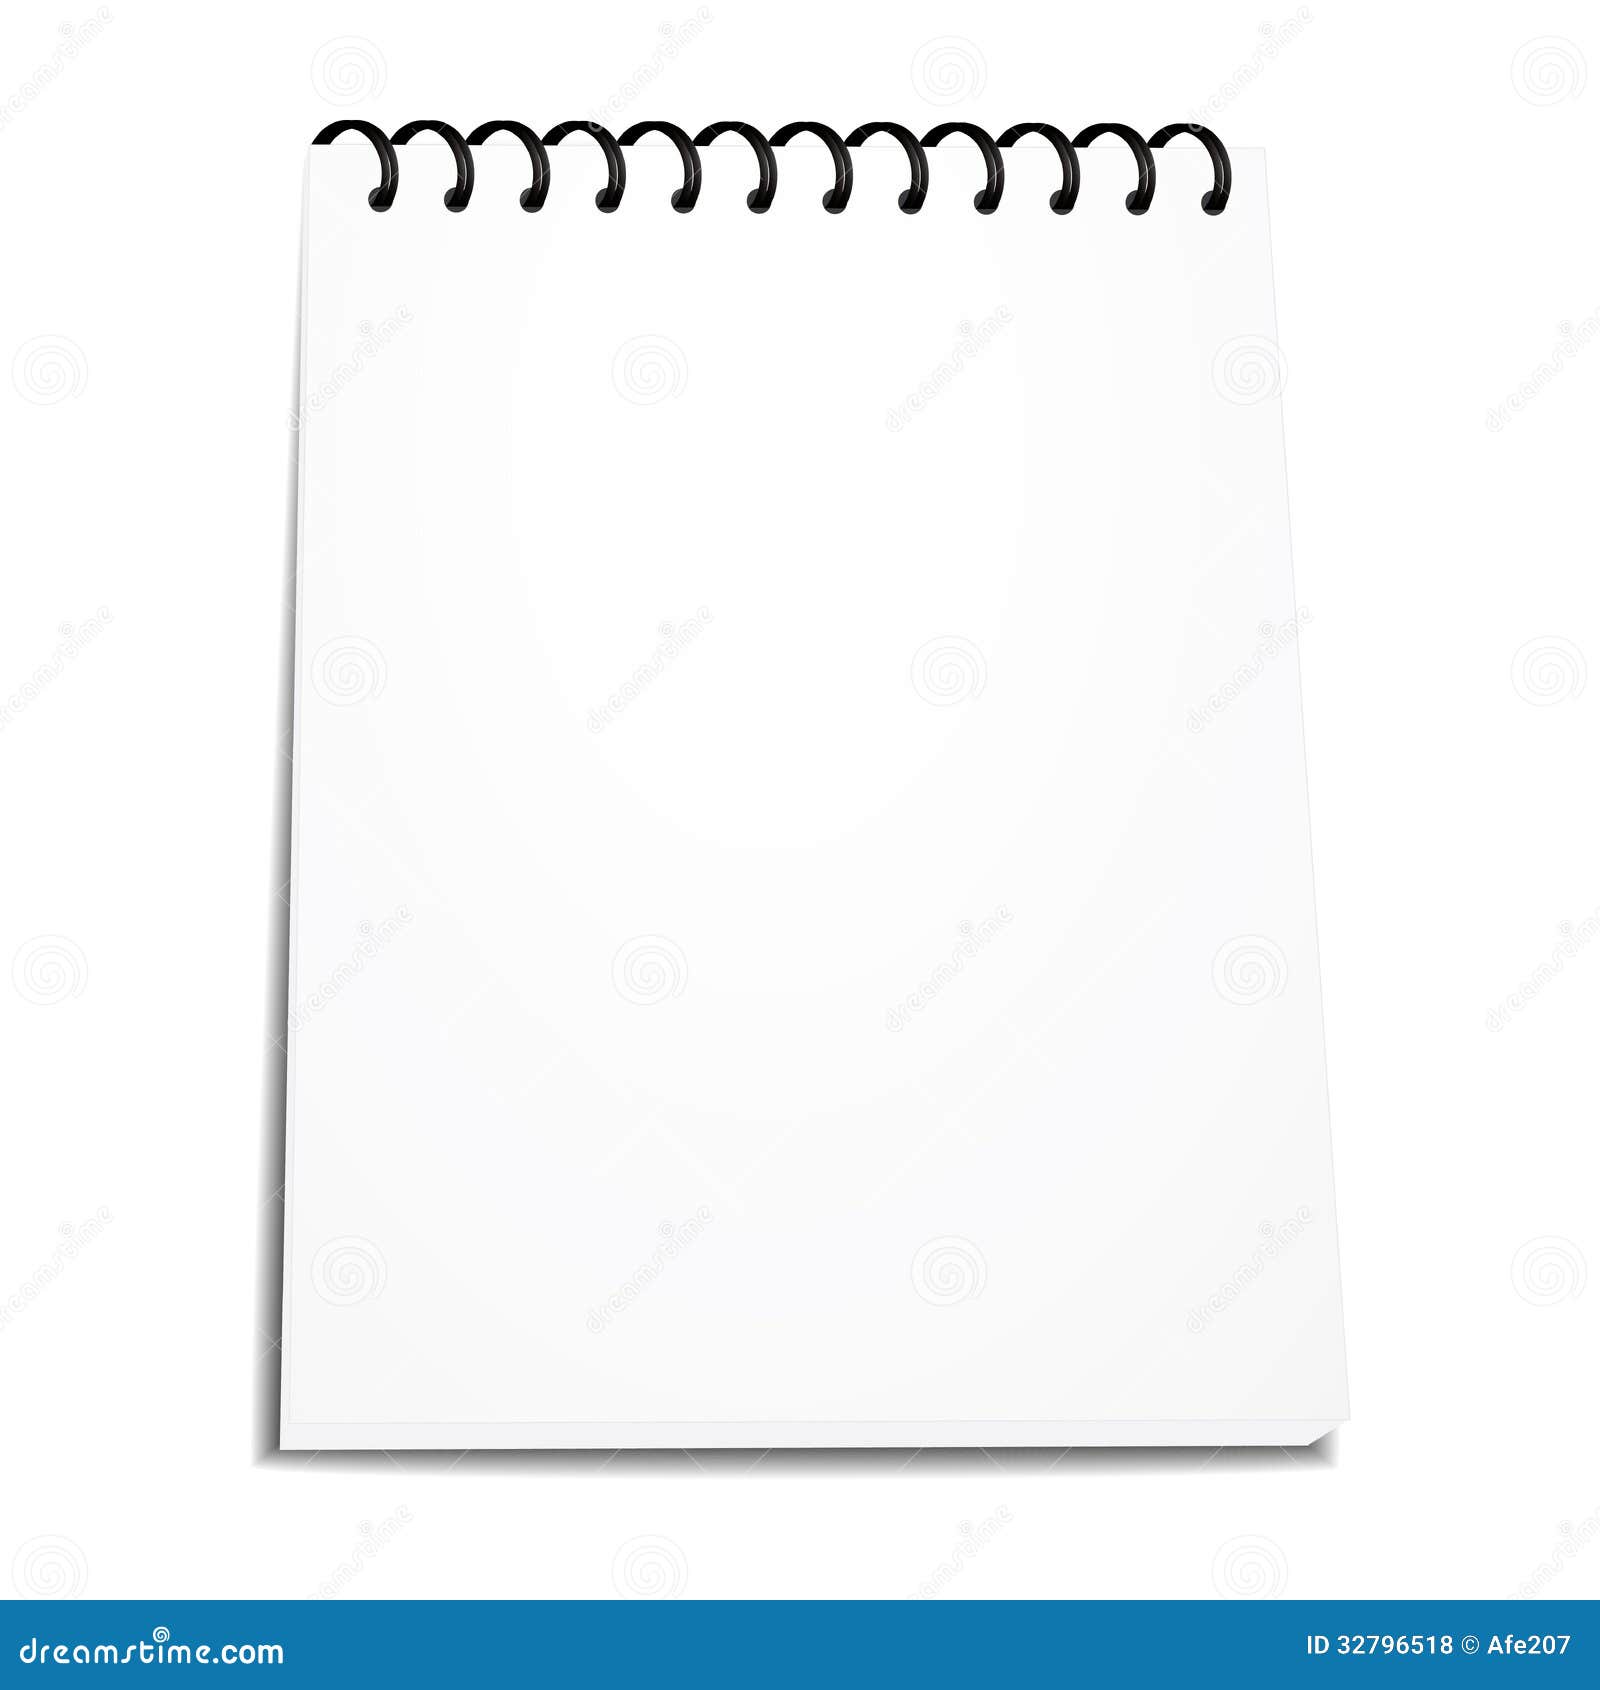 notebook binder clipart - photo #24